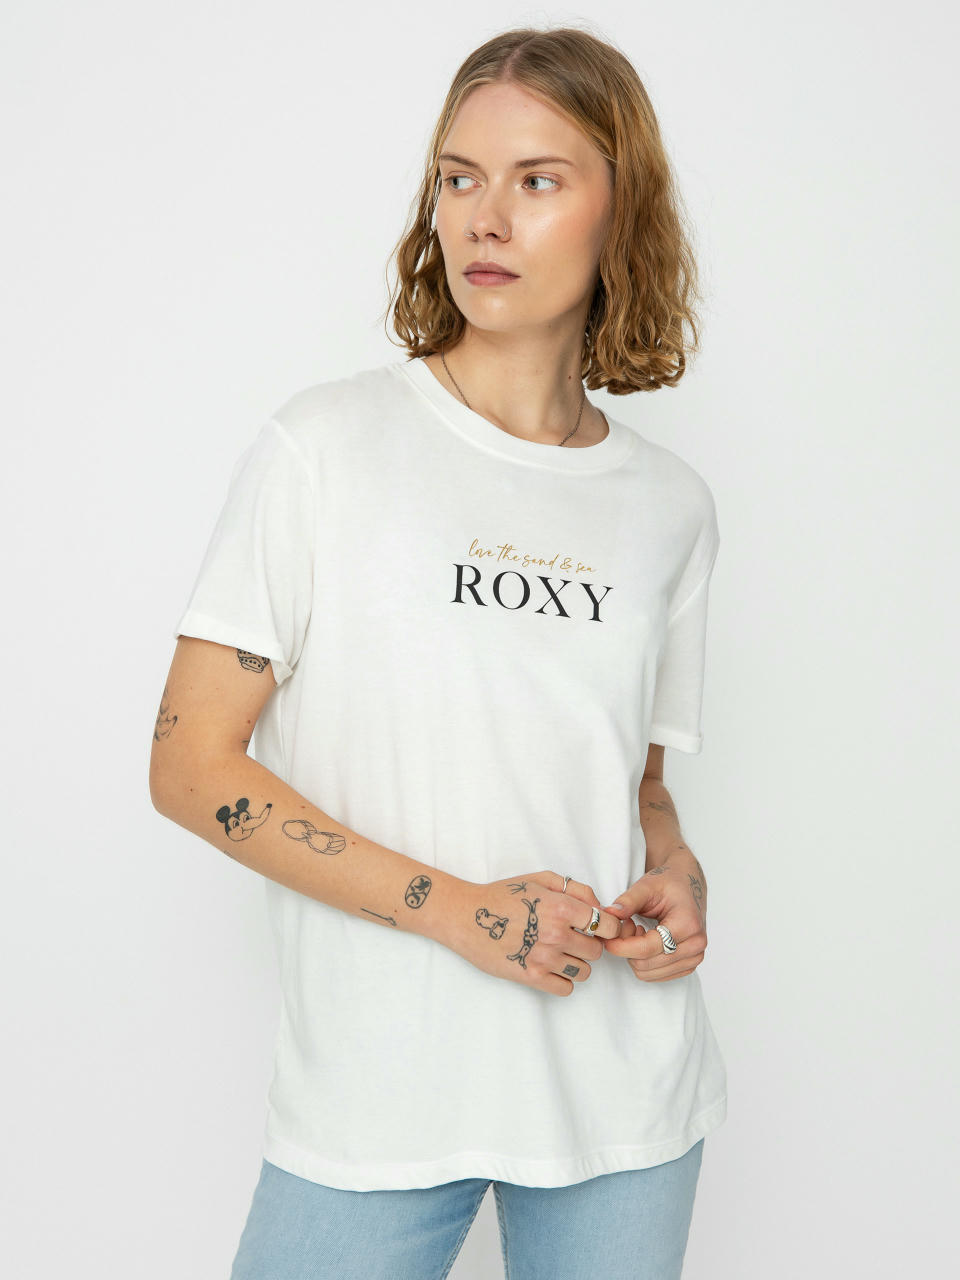 Urban Roxy - SUPER-SHOP | Sale